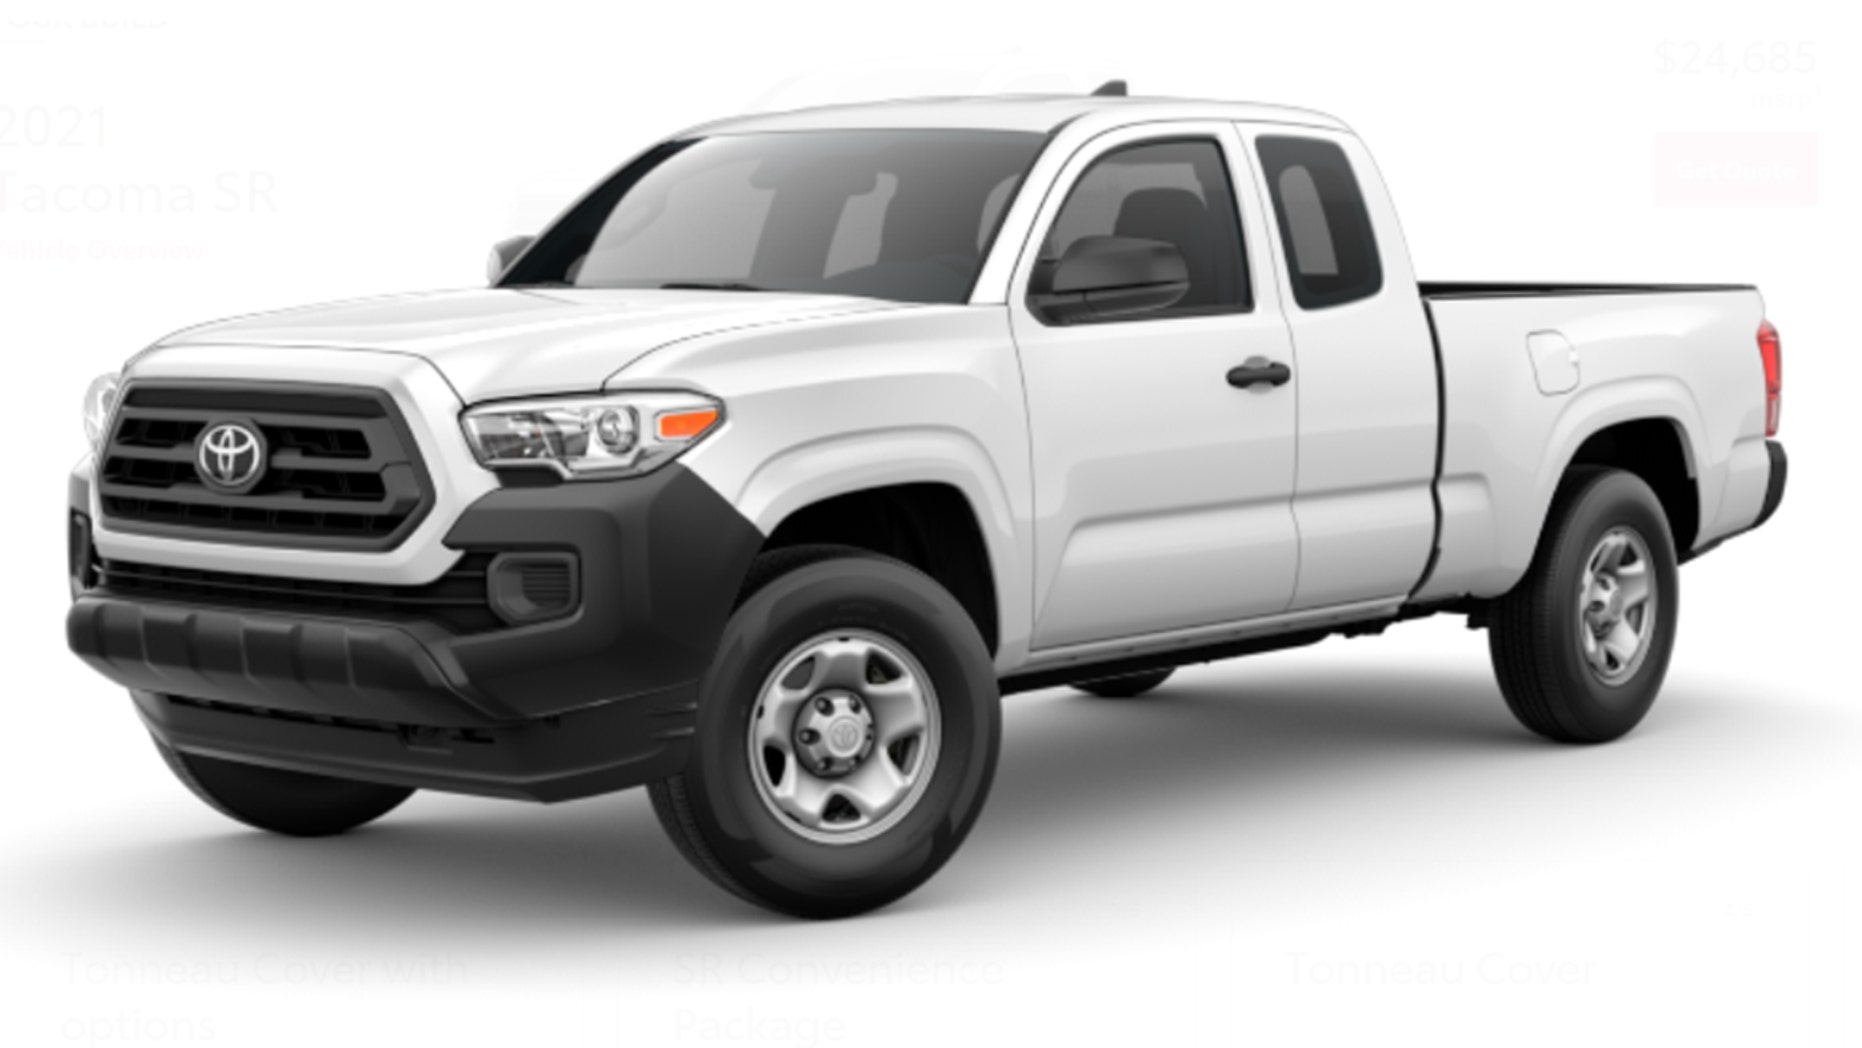 2021 base Toyota Tacoma pickup in fleet white